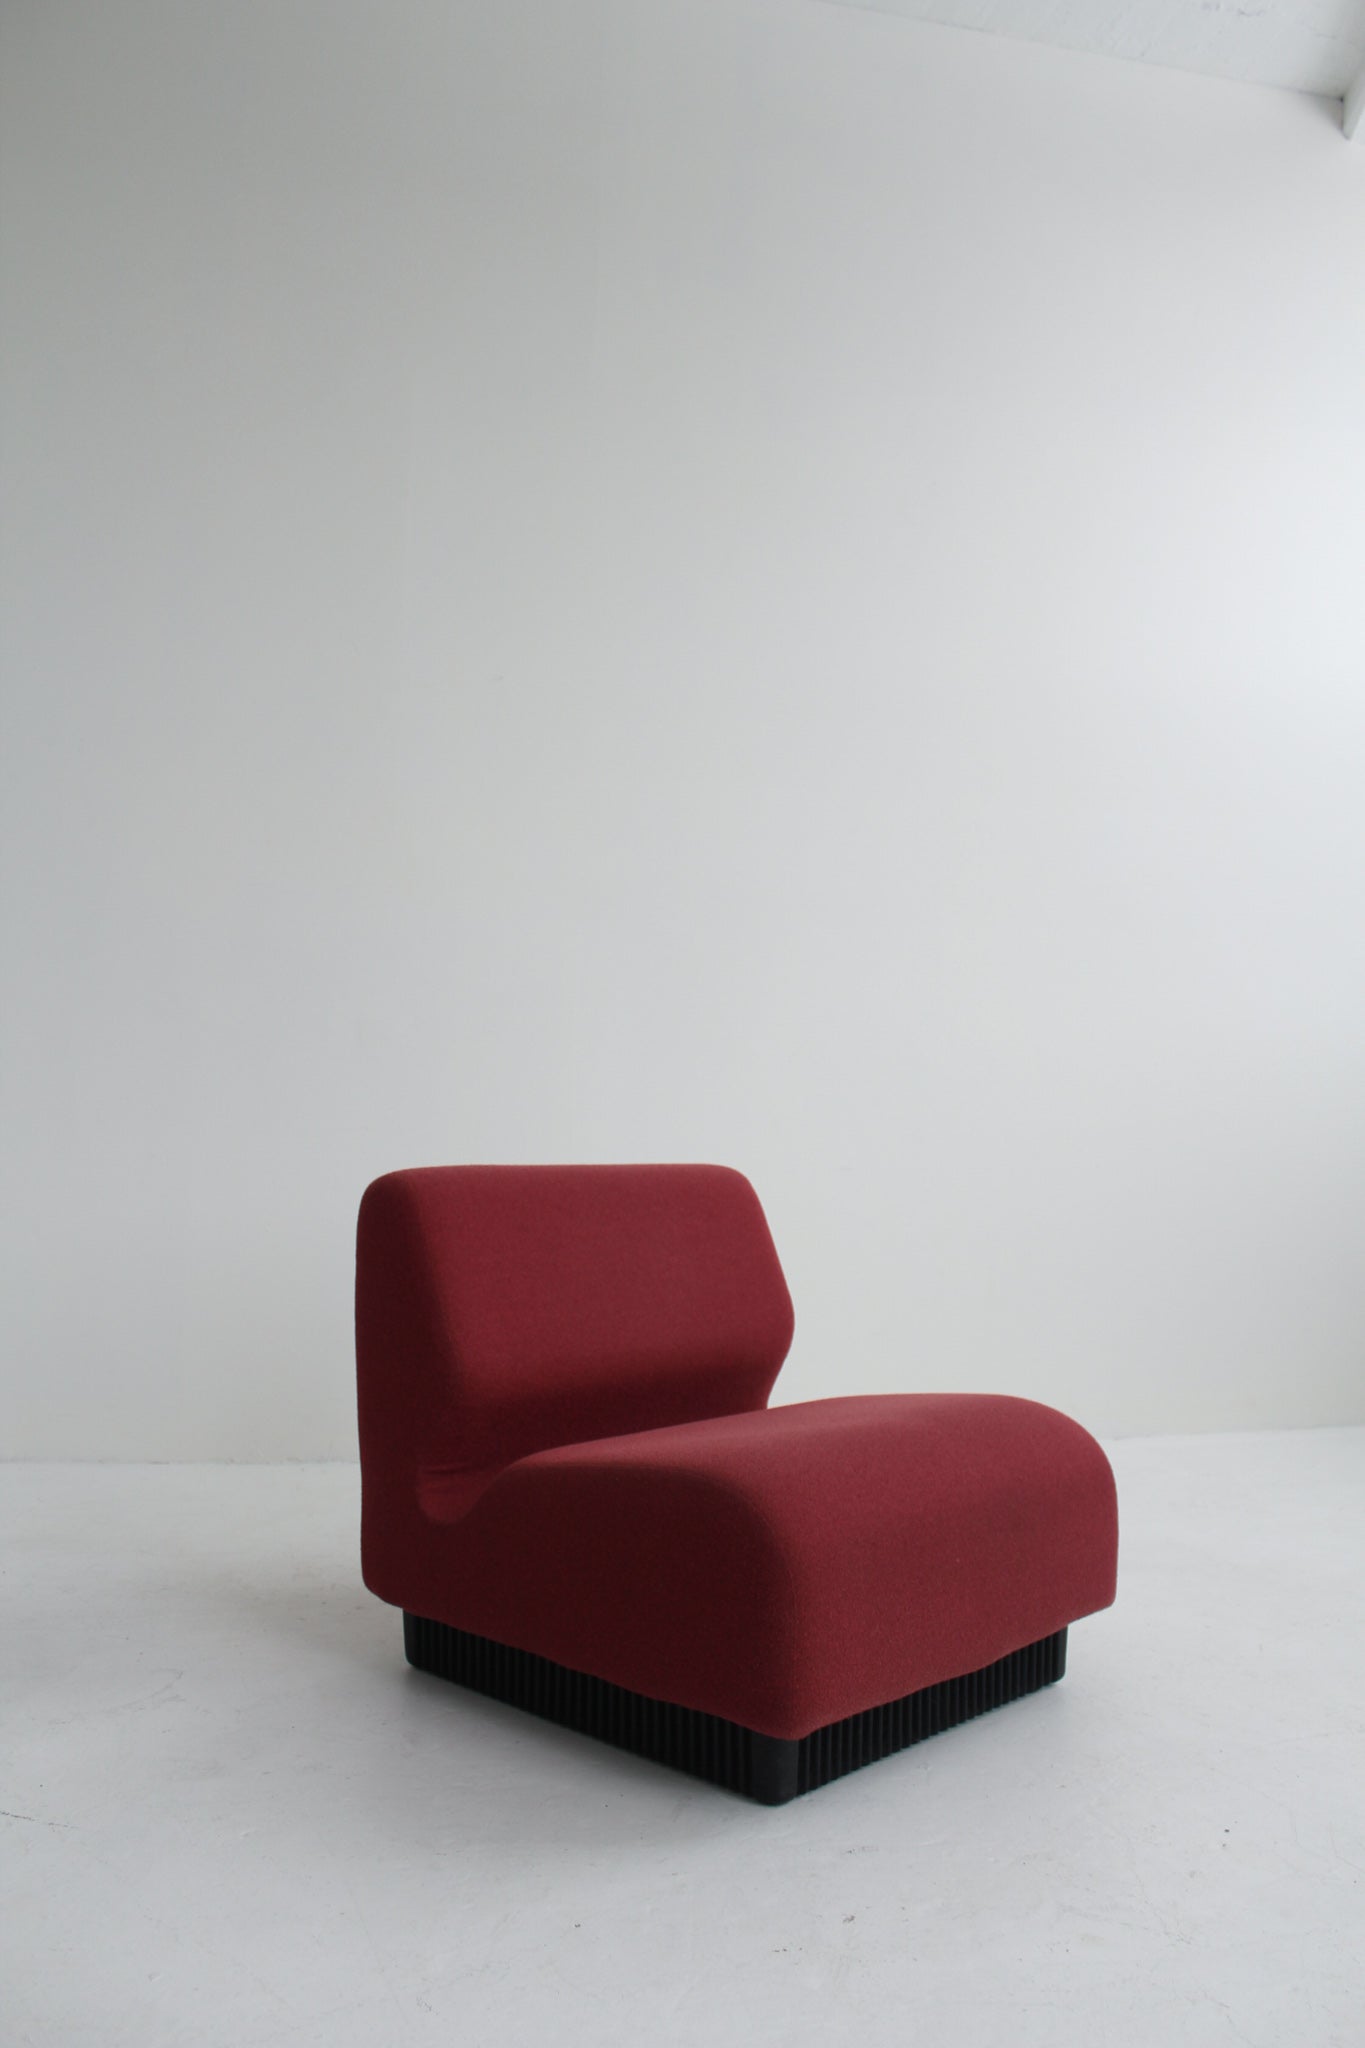 Modular Sofa by Don Chadwick for Herman Miller